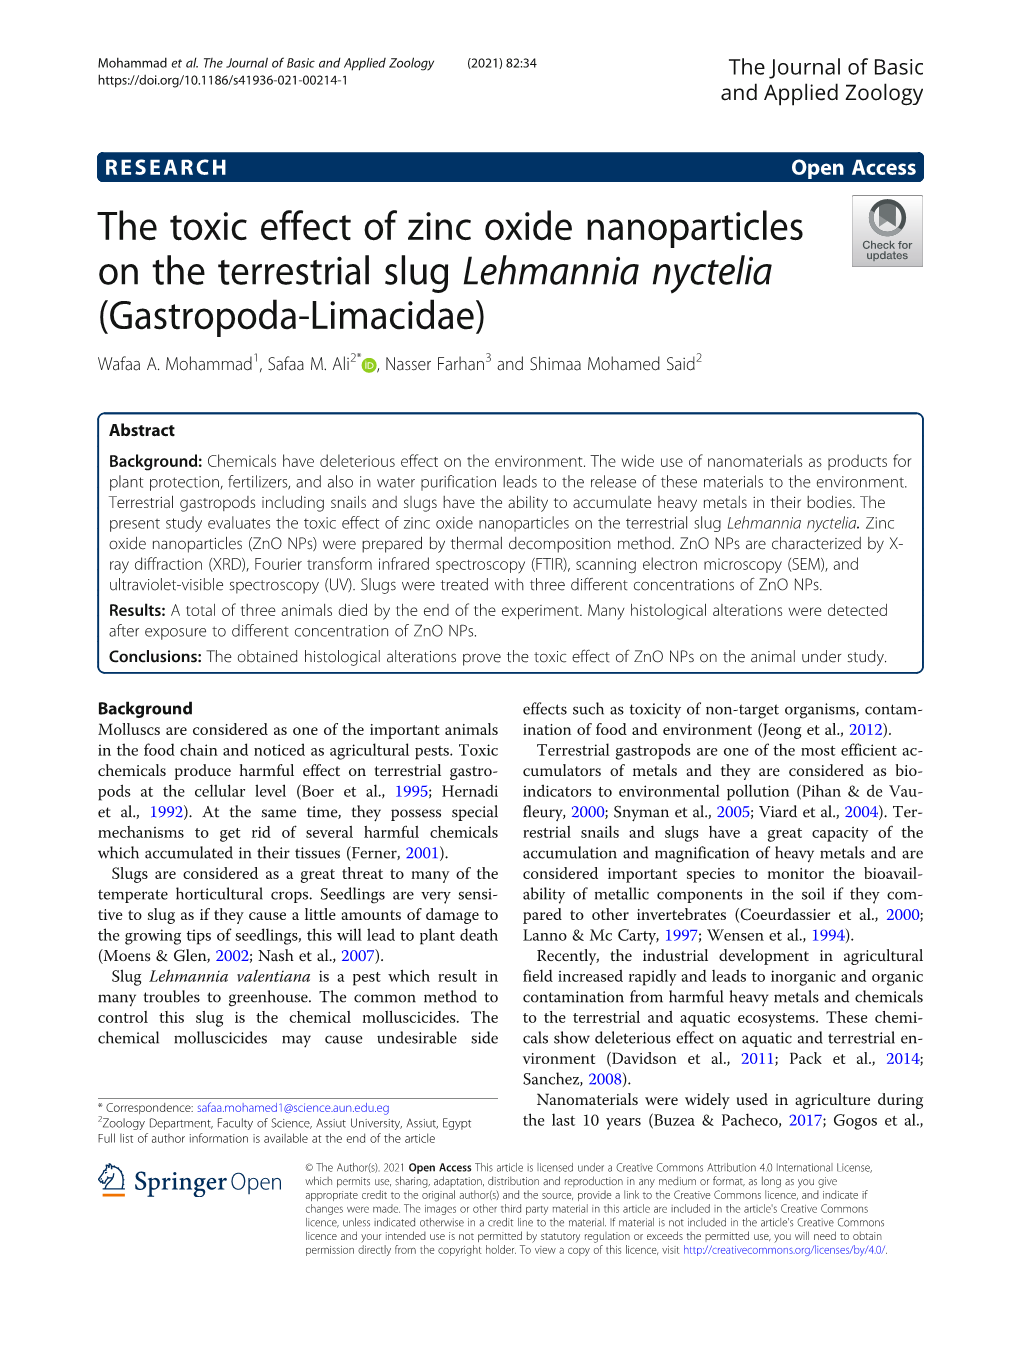 The Toxic Effect of Zinc Oxide Nanoparticles on the Terrestrial Slug Lehmannia Nyctelia (Gastropoda-Limacidae) Wafaa A